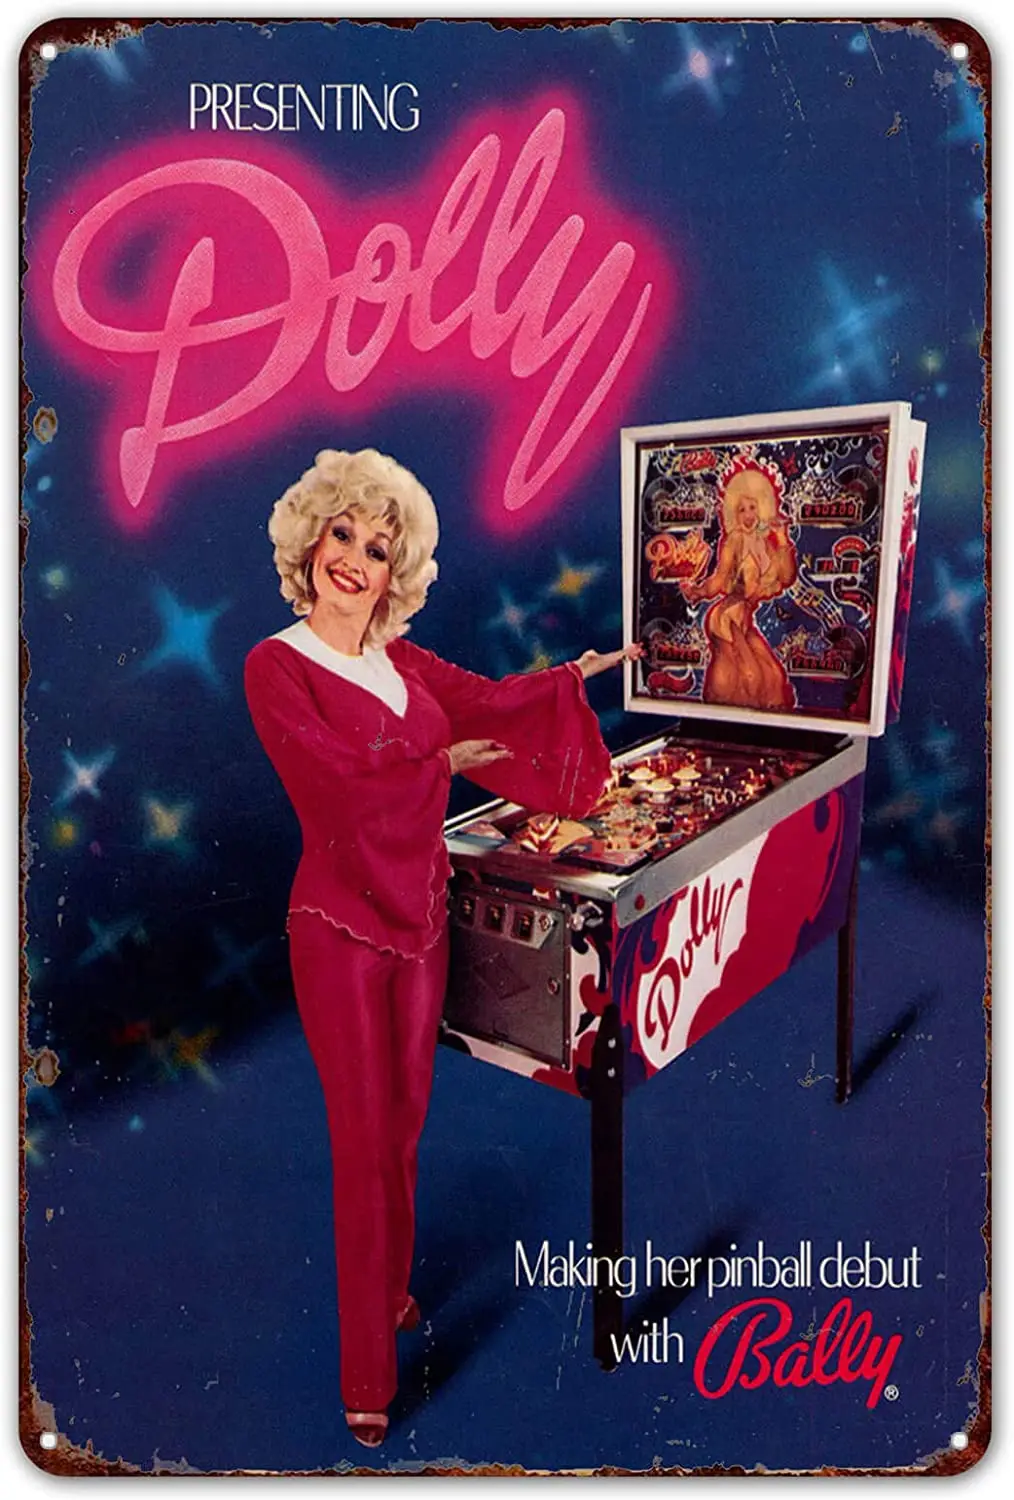 

ZYPENG Tin Sign Dolly - Parton Bally Pinball Vintage Ad Reproduction Metal Sign Home Wall Decor 8 x 12 inches